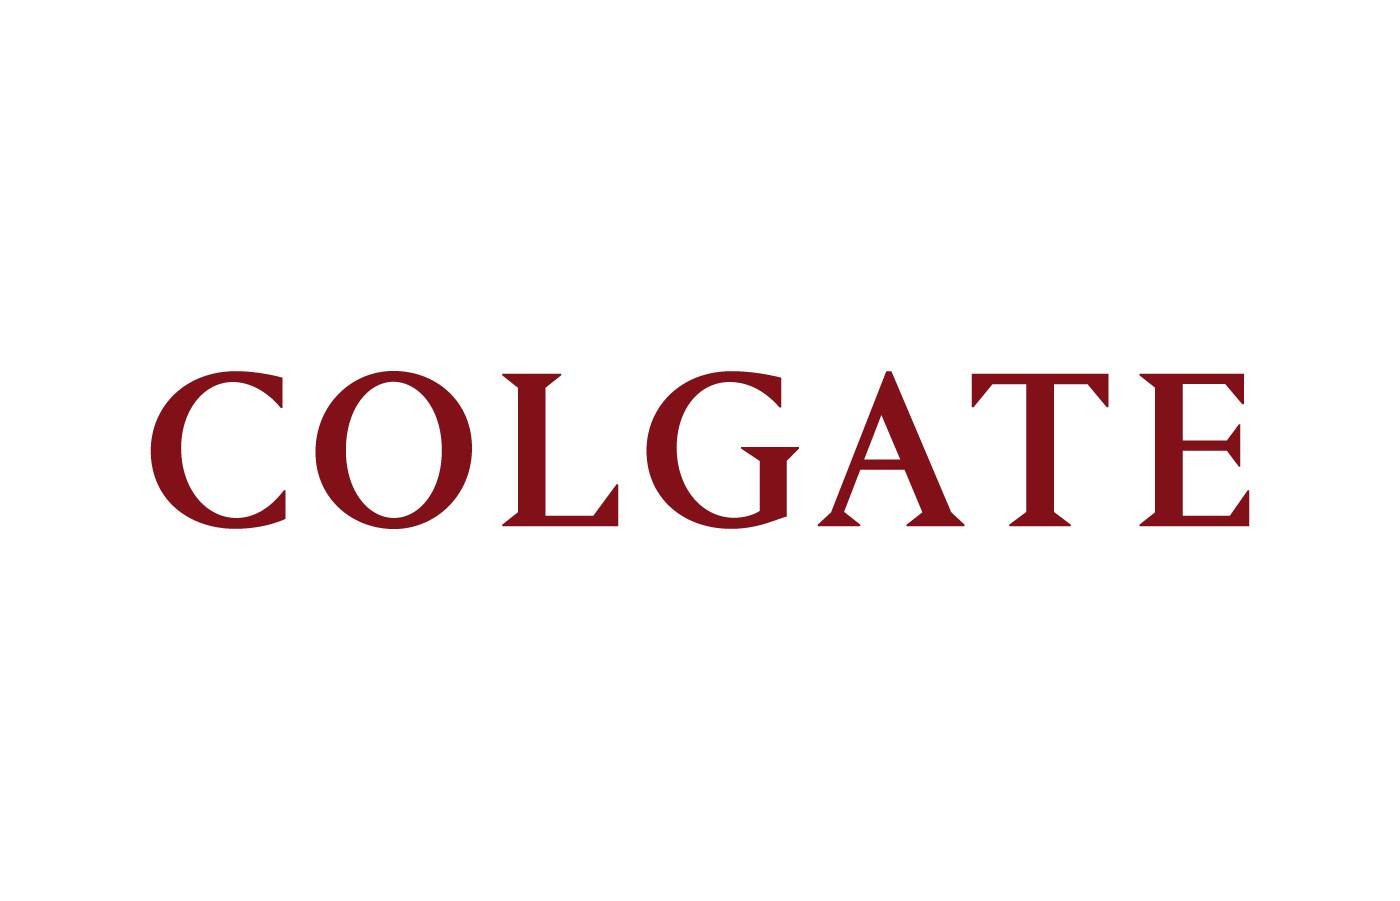 COLGATE wordmark